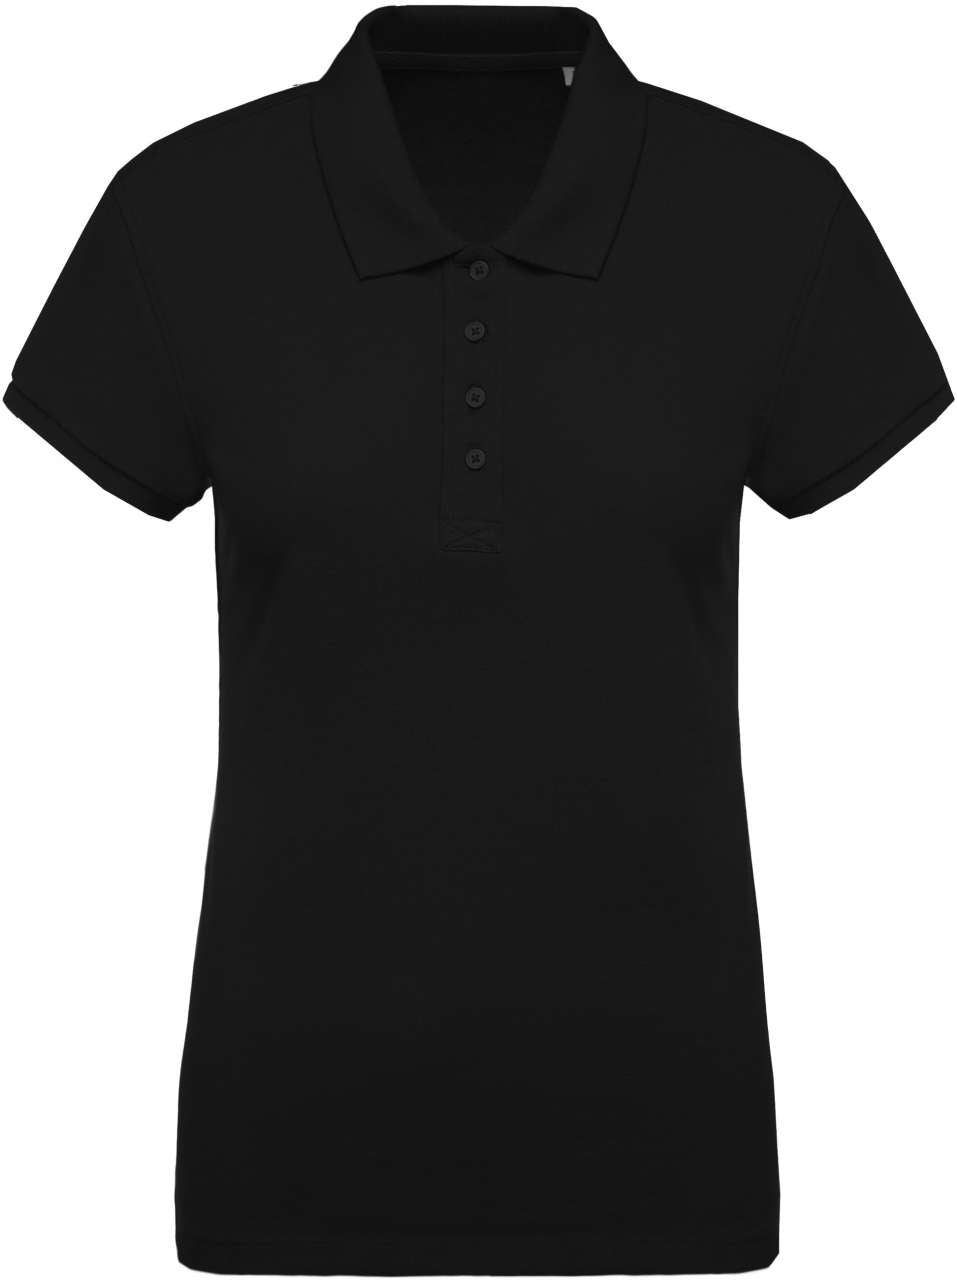 Kariban Damen Poloshirt Polo Shirt Basic T-Shirt Pique Kurzarm